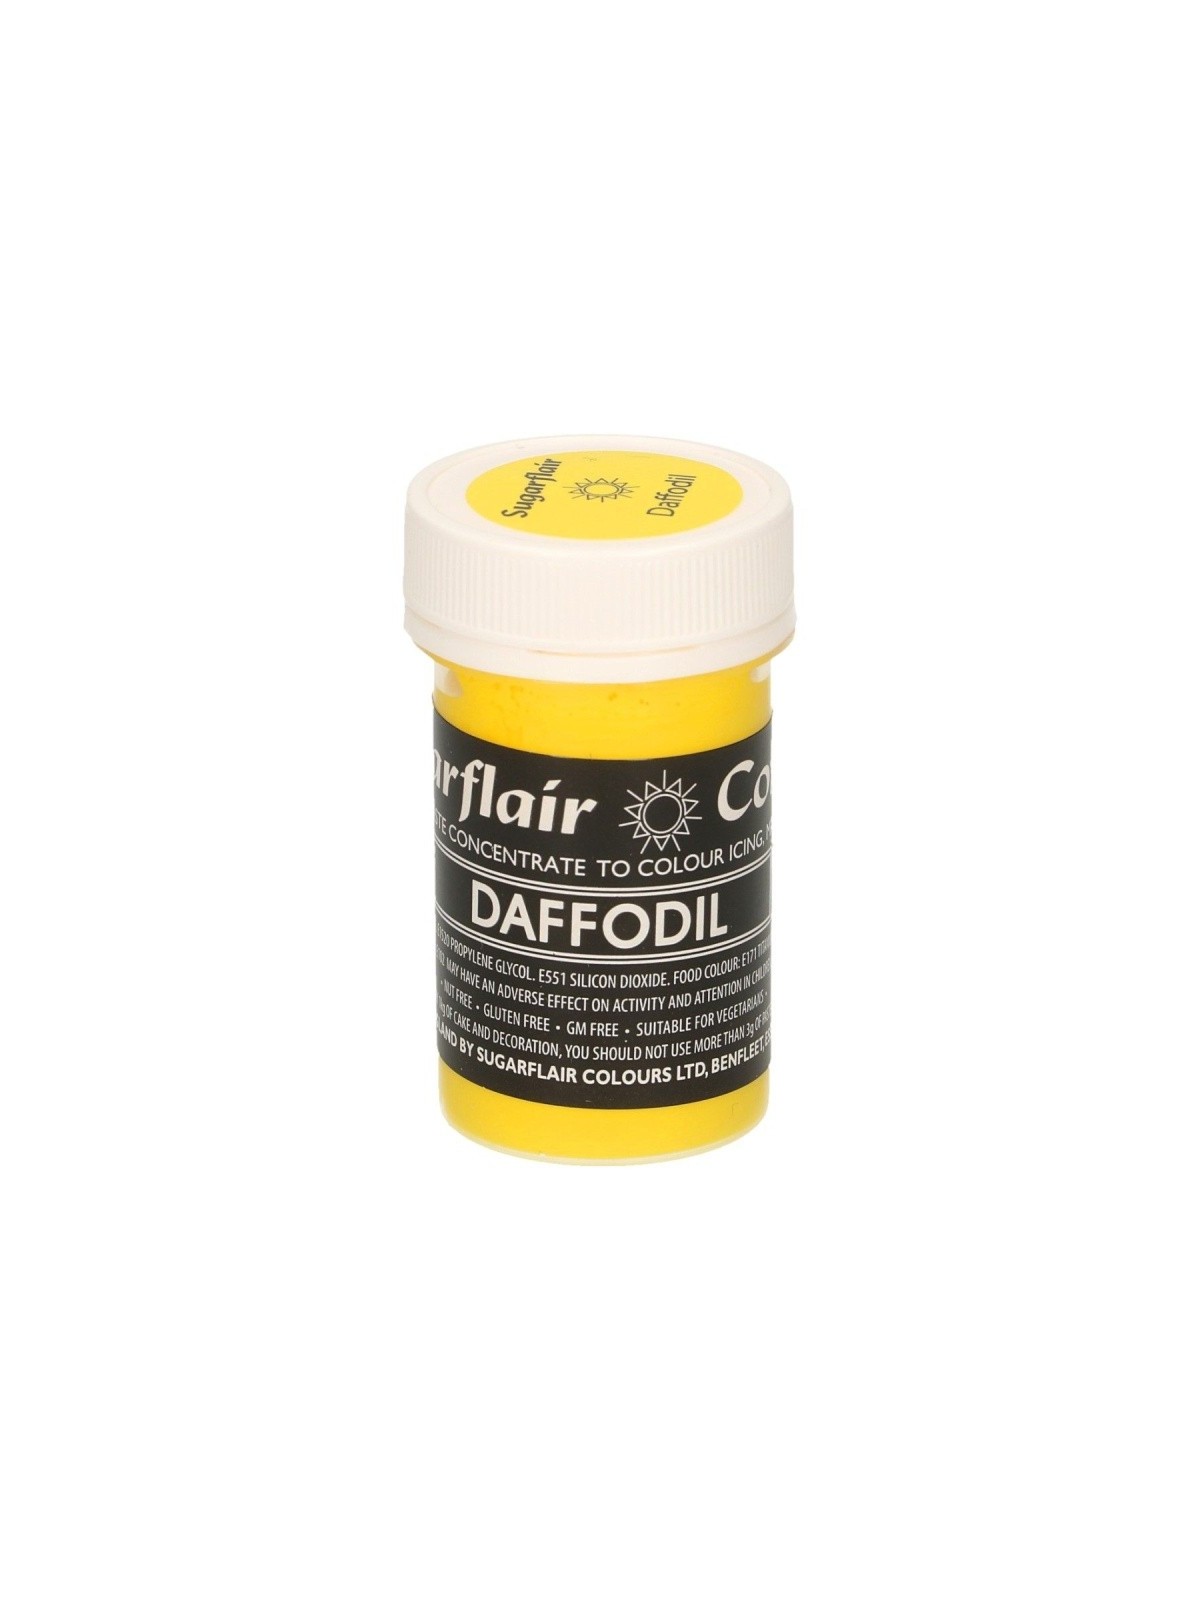 Sugarflair paste colour -  Daffodil 25g